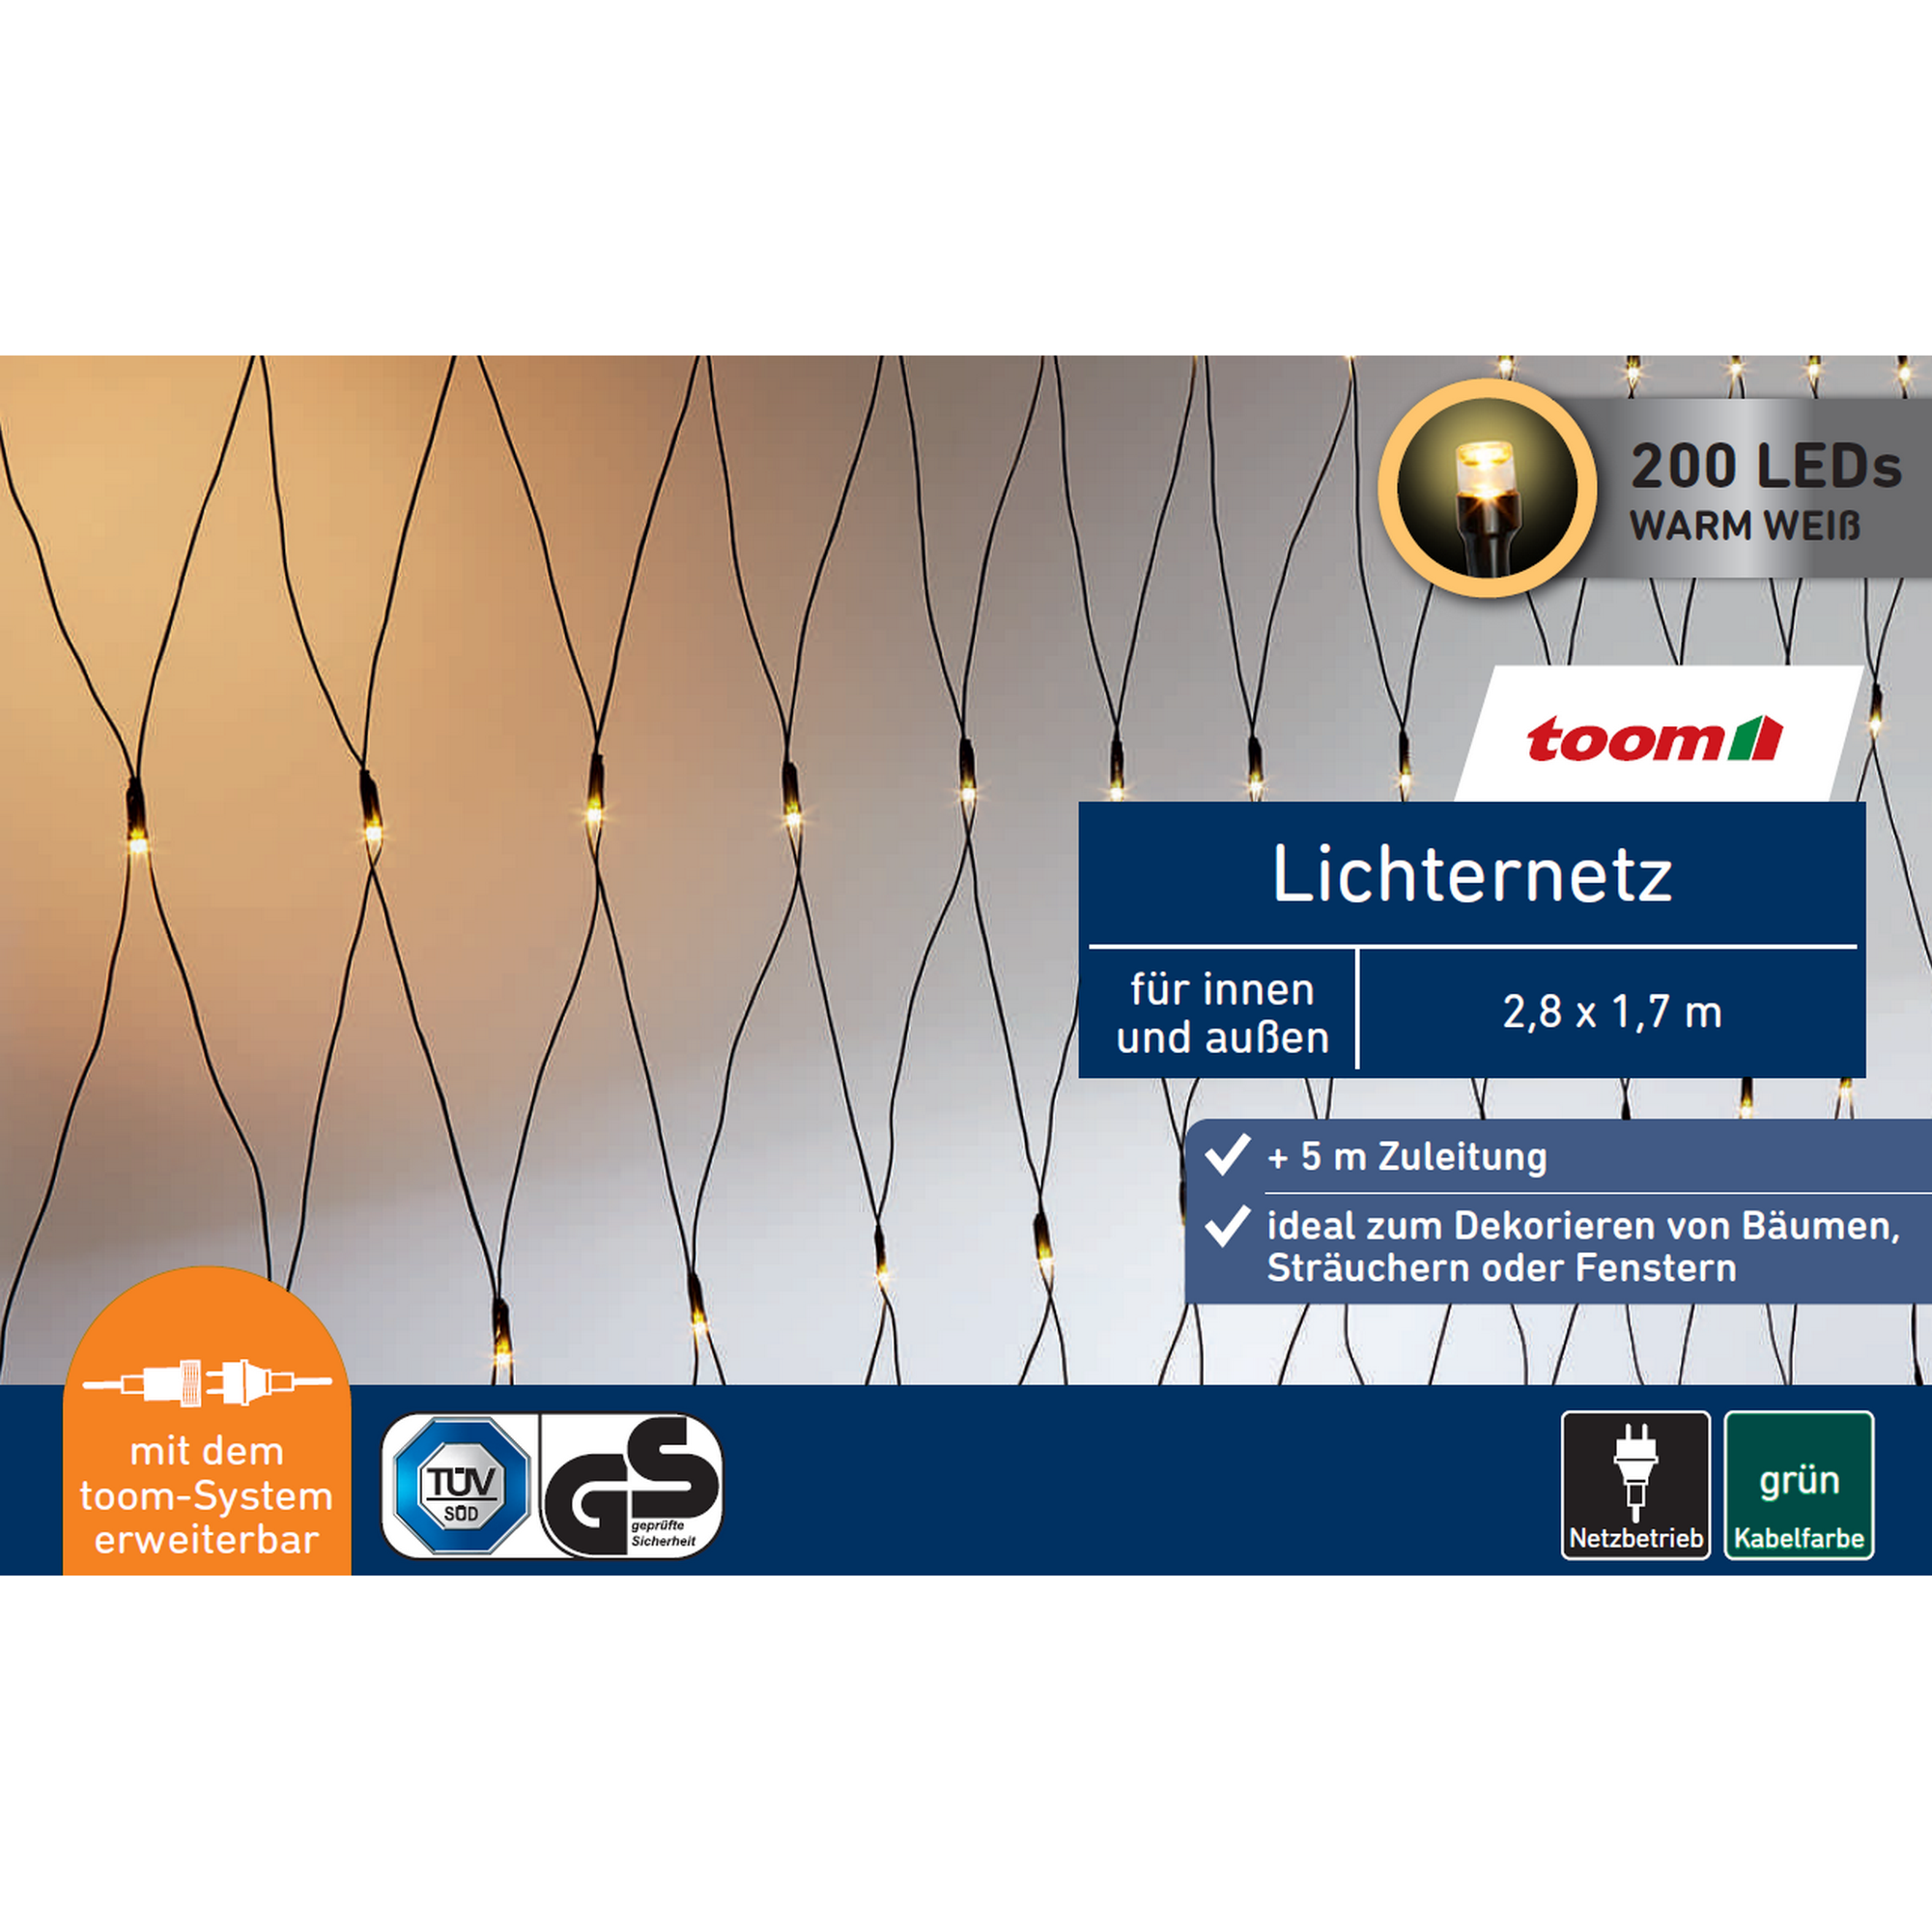 LED-Lichternetz 200 LEDs warmweiß 280 x 170 cm + product picture